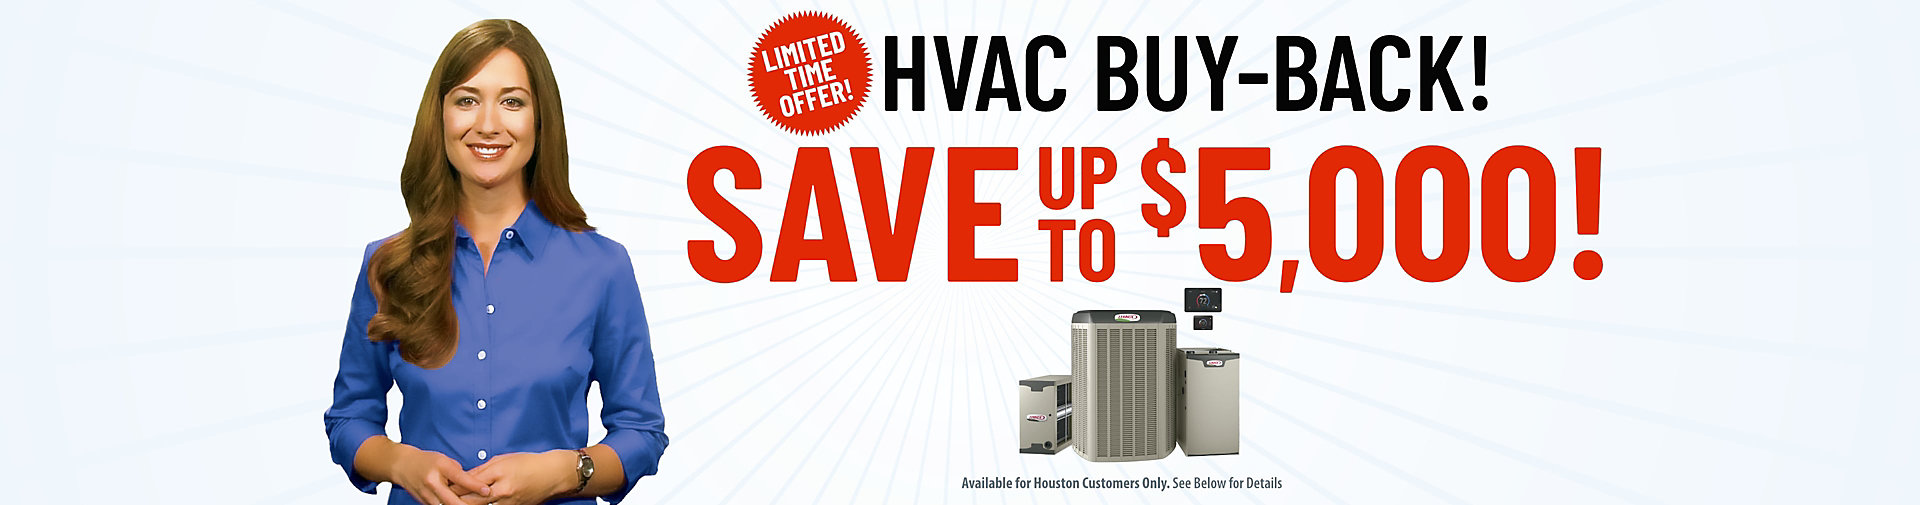 HVAC Buy-Back. Save Up To $5,000